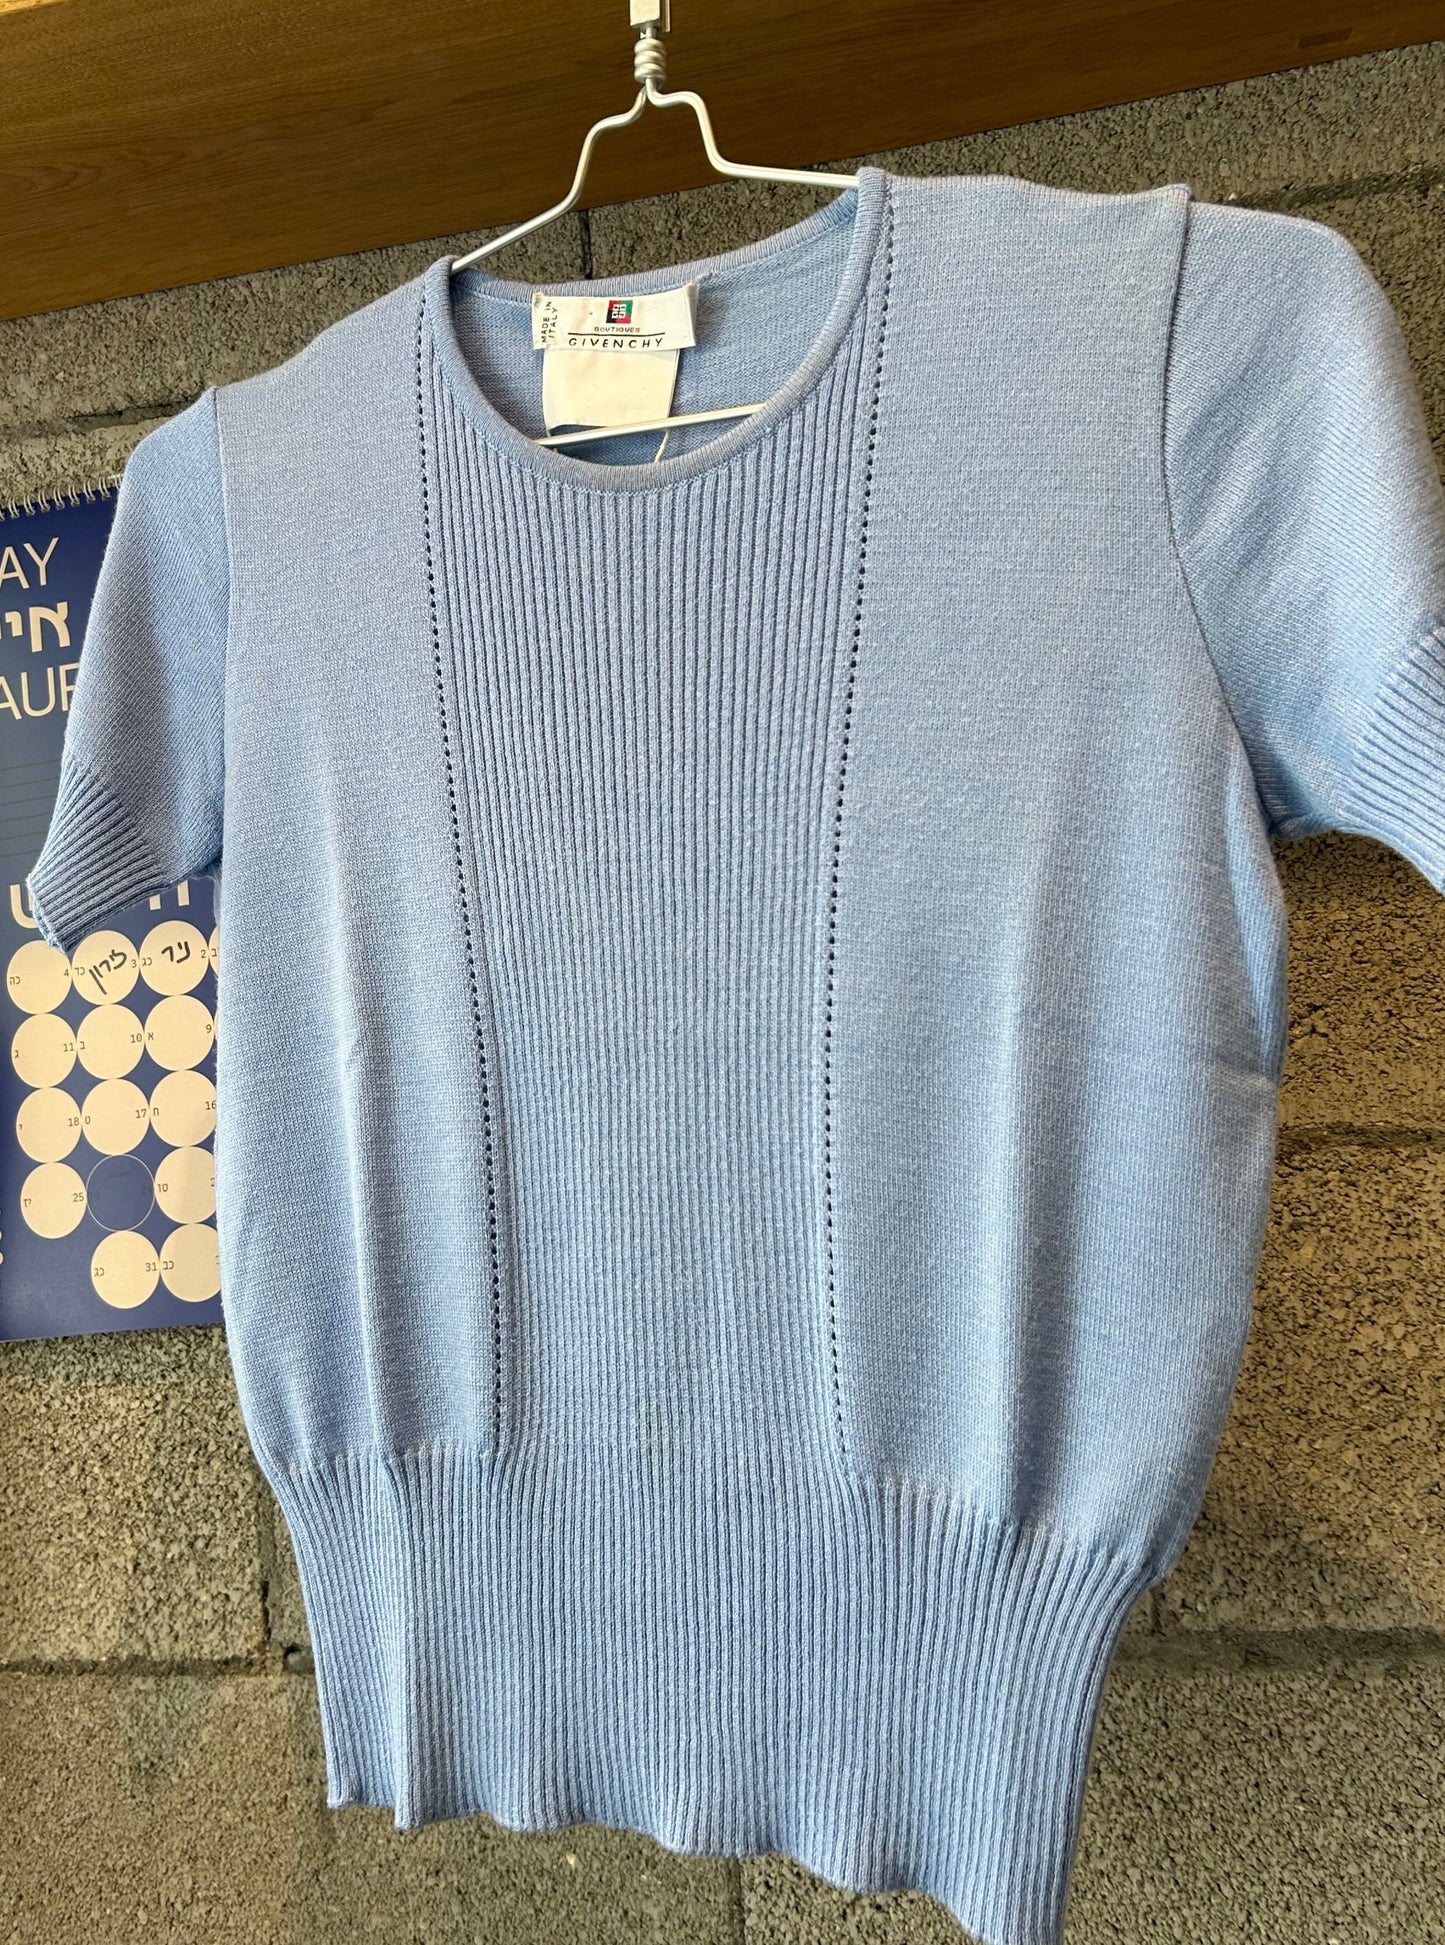 GIVENCHY knit blouse